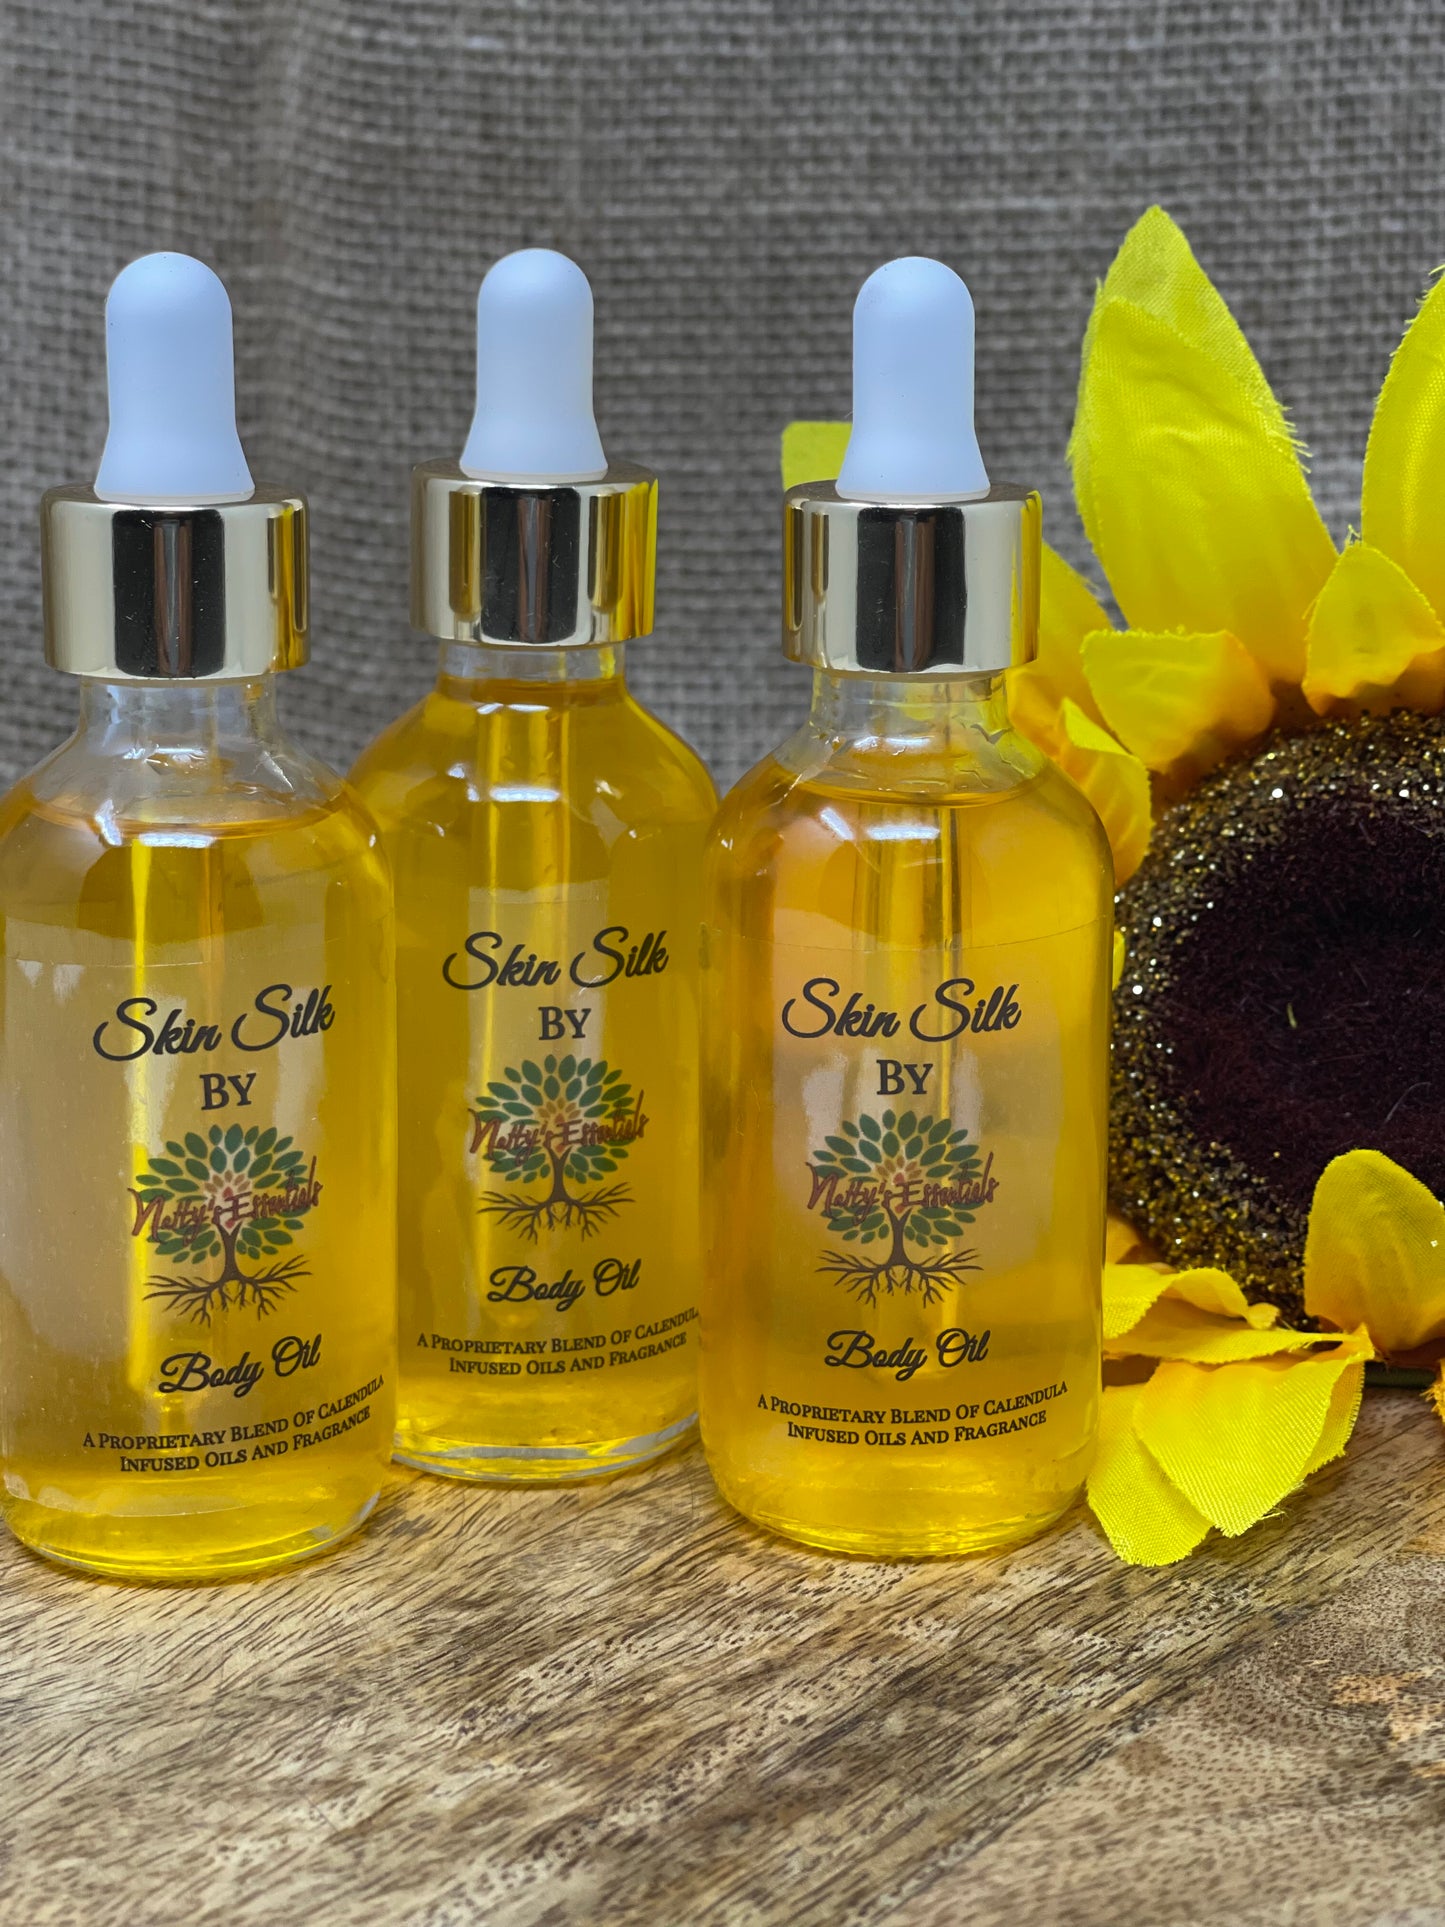 'Skin Silk' Body Oil by Natty's Essentials